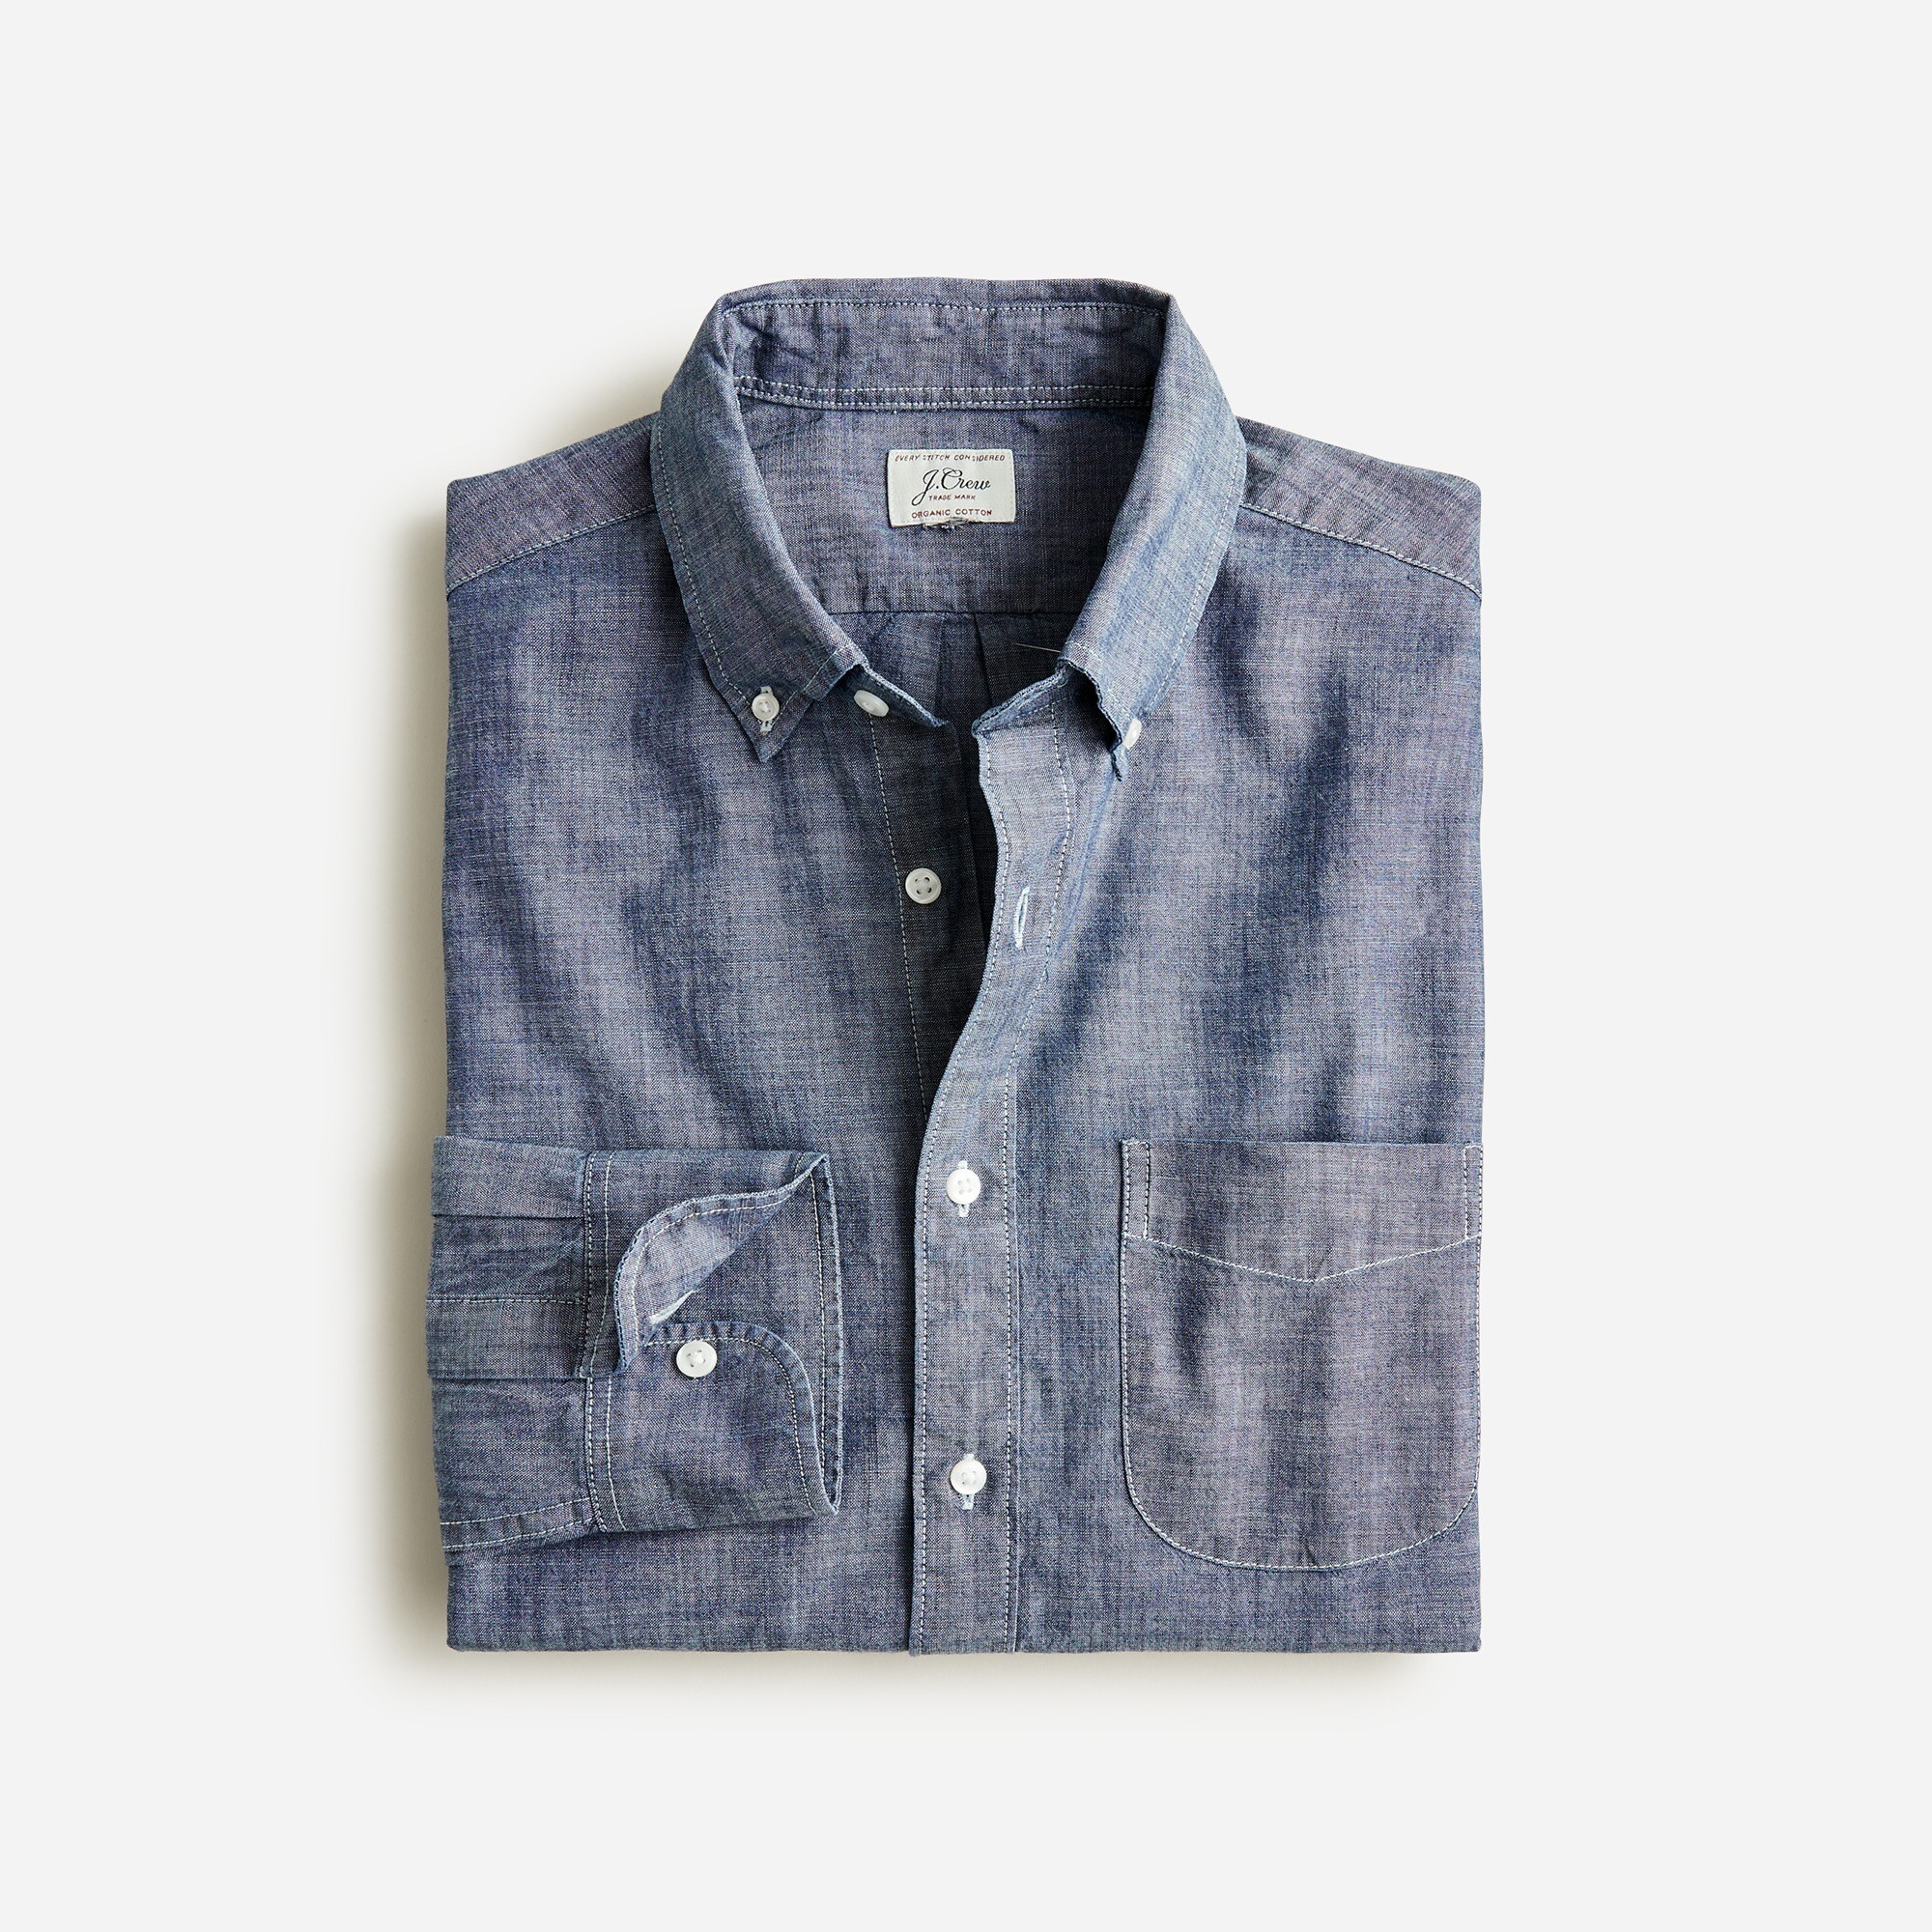  Organic cotton chambray shirt in one-year wash